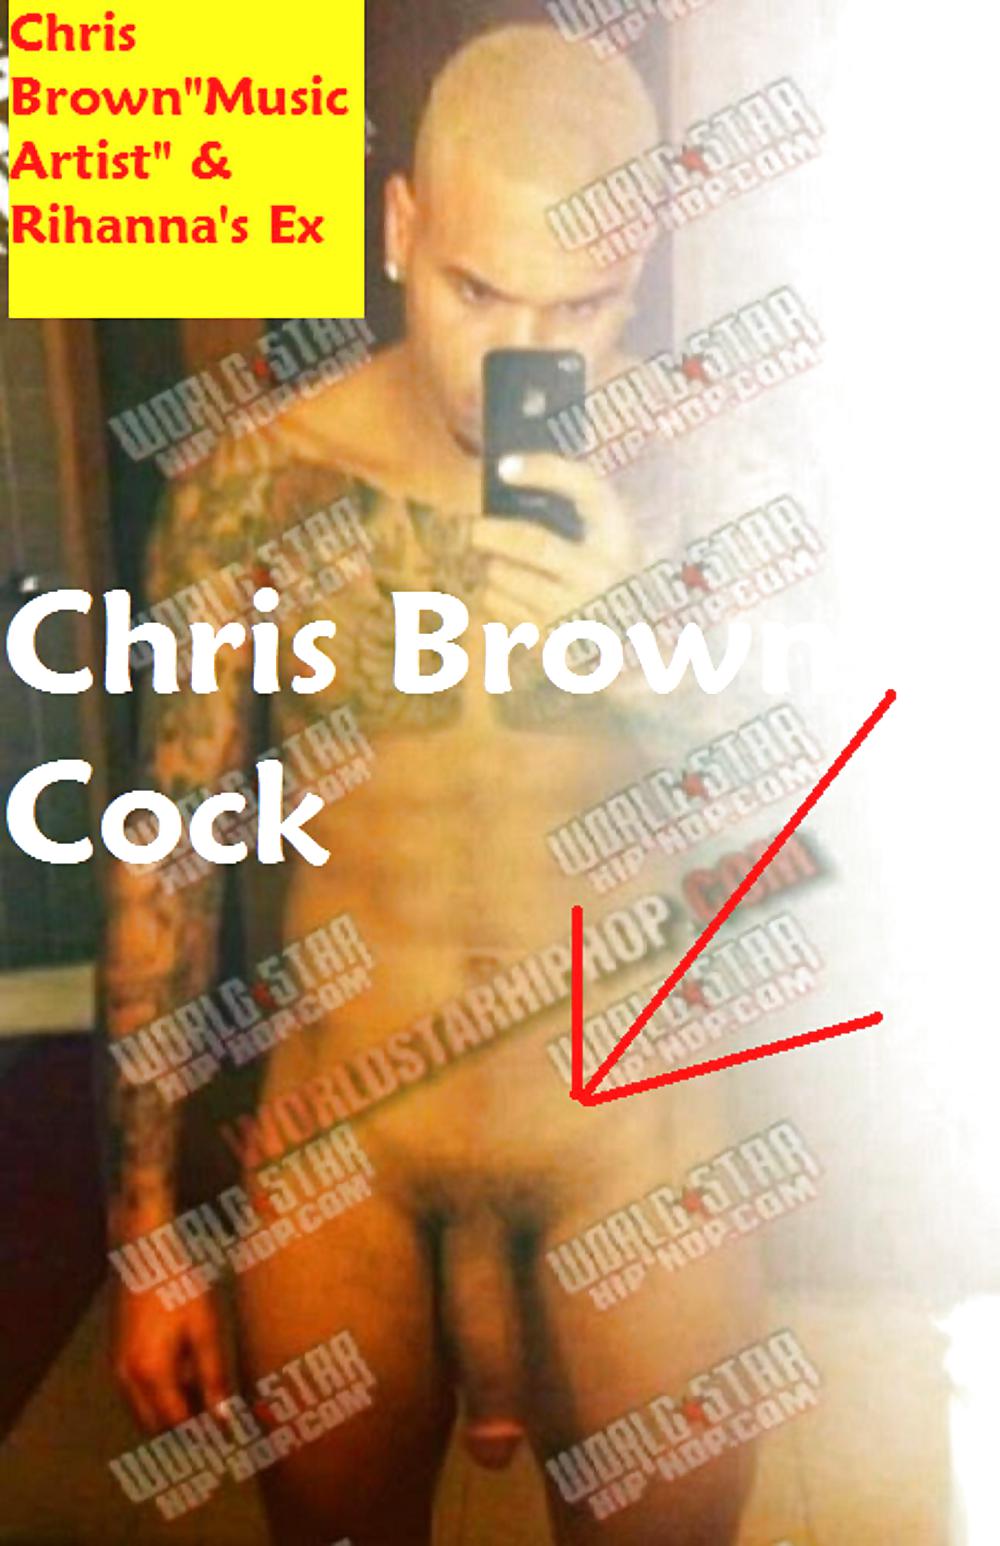 Chris Brown Naked Sidekick.